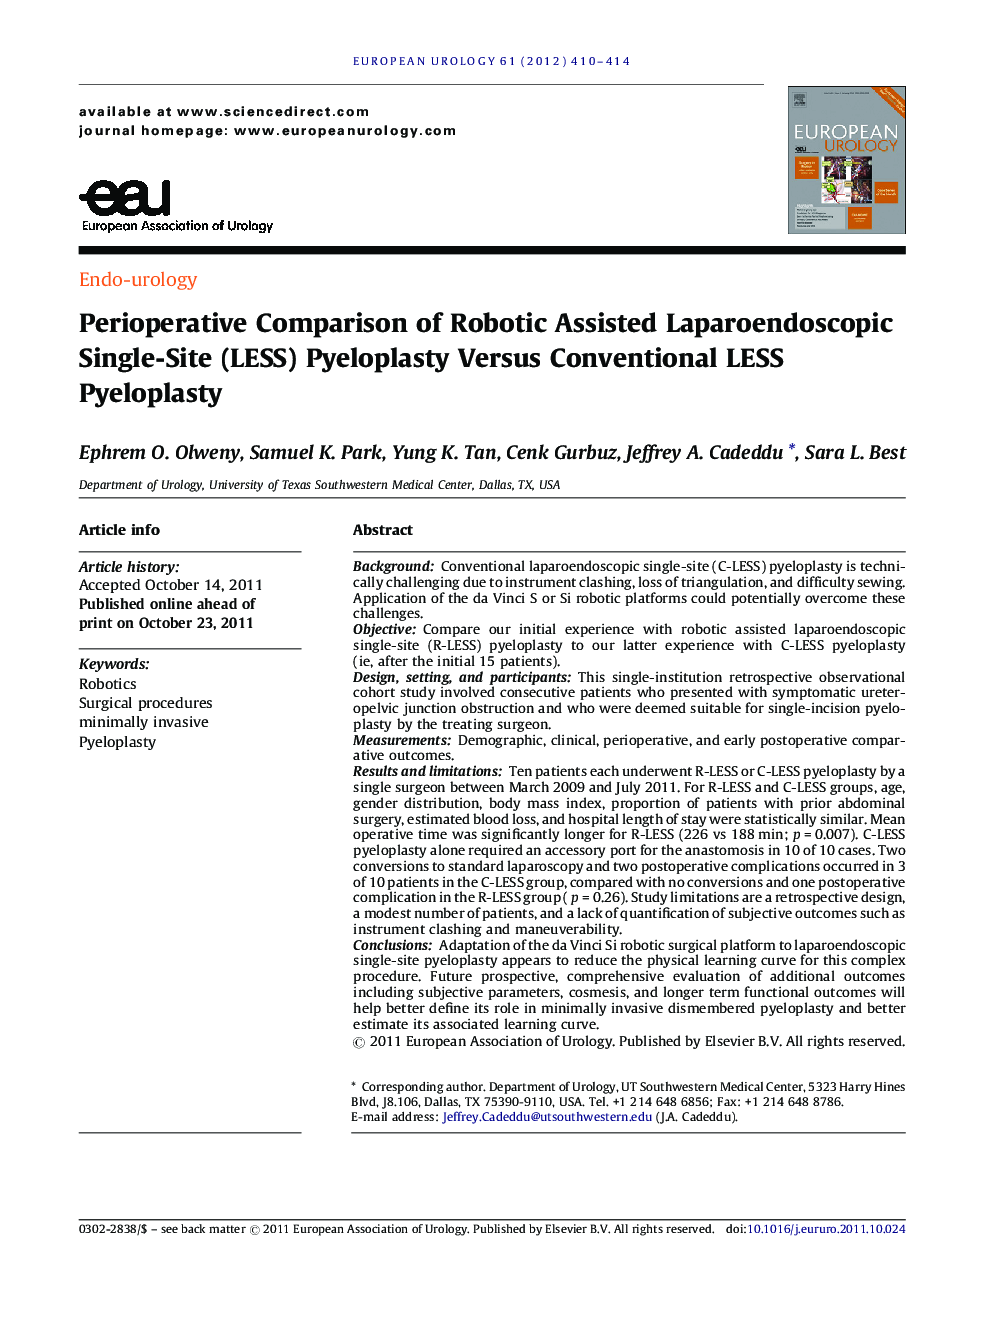 Perioperative Comparison of Robotic Assisted Laparoendoscopic Single-Site (LESS) Pyeloplasty Versus Conventional LESS Pyeloplasty